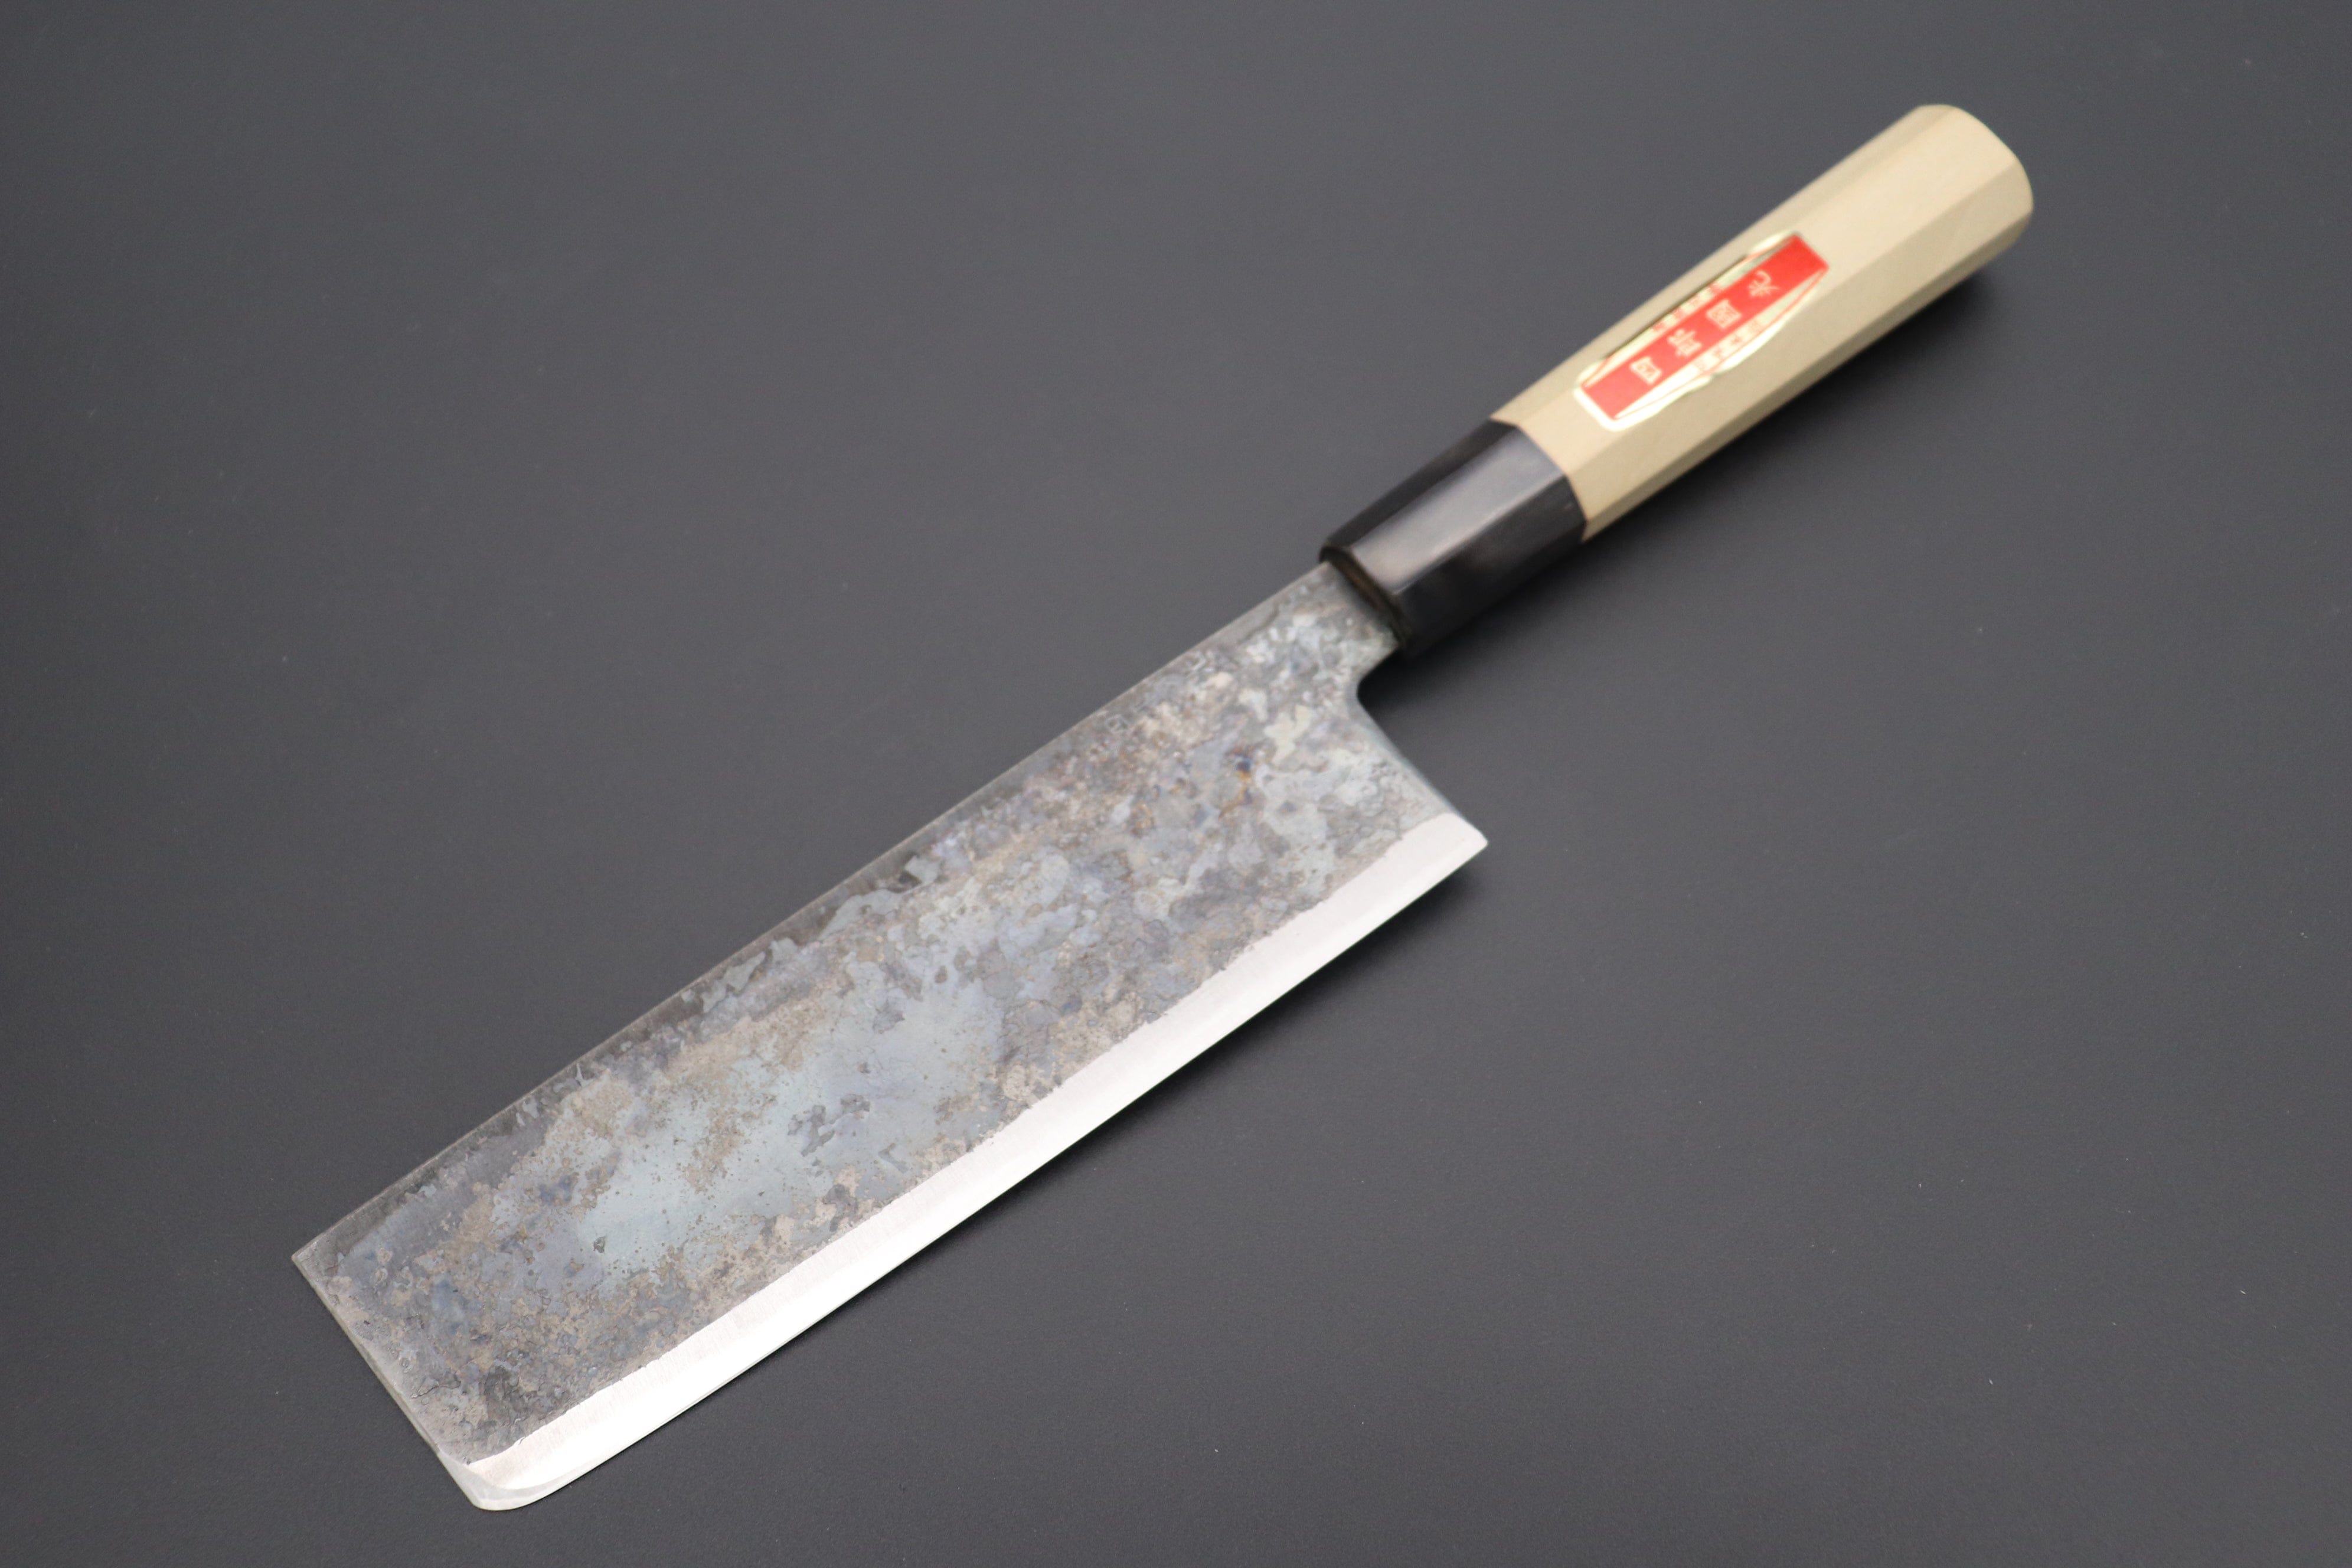 Crude Premium Heavy Duty Cleaver Meat Chopping Knife, 9 Inch